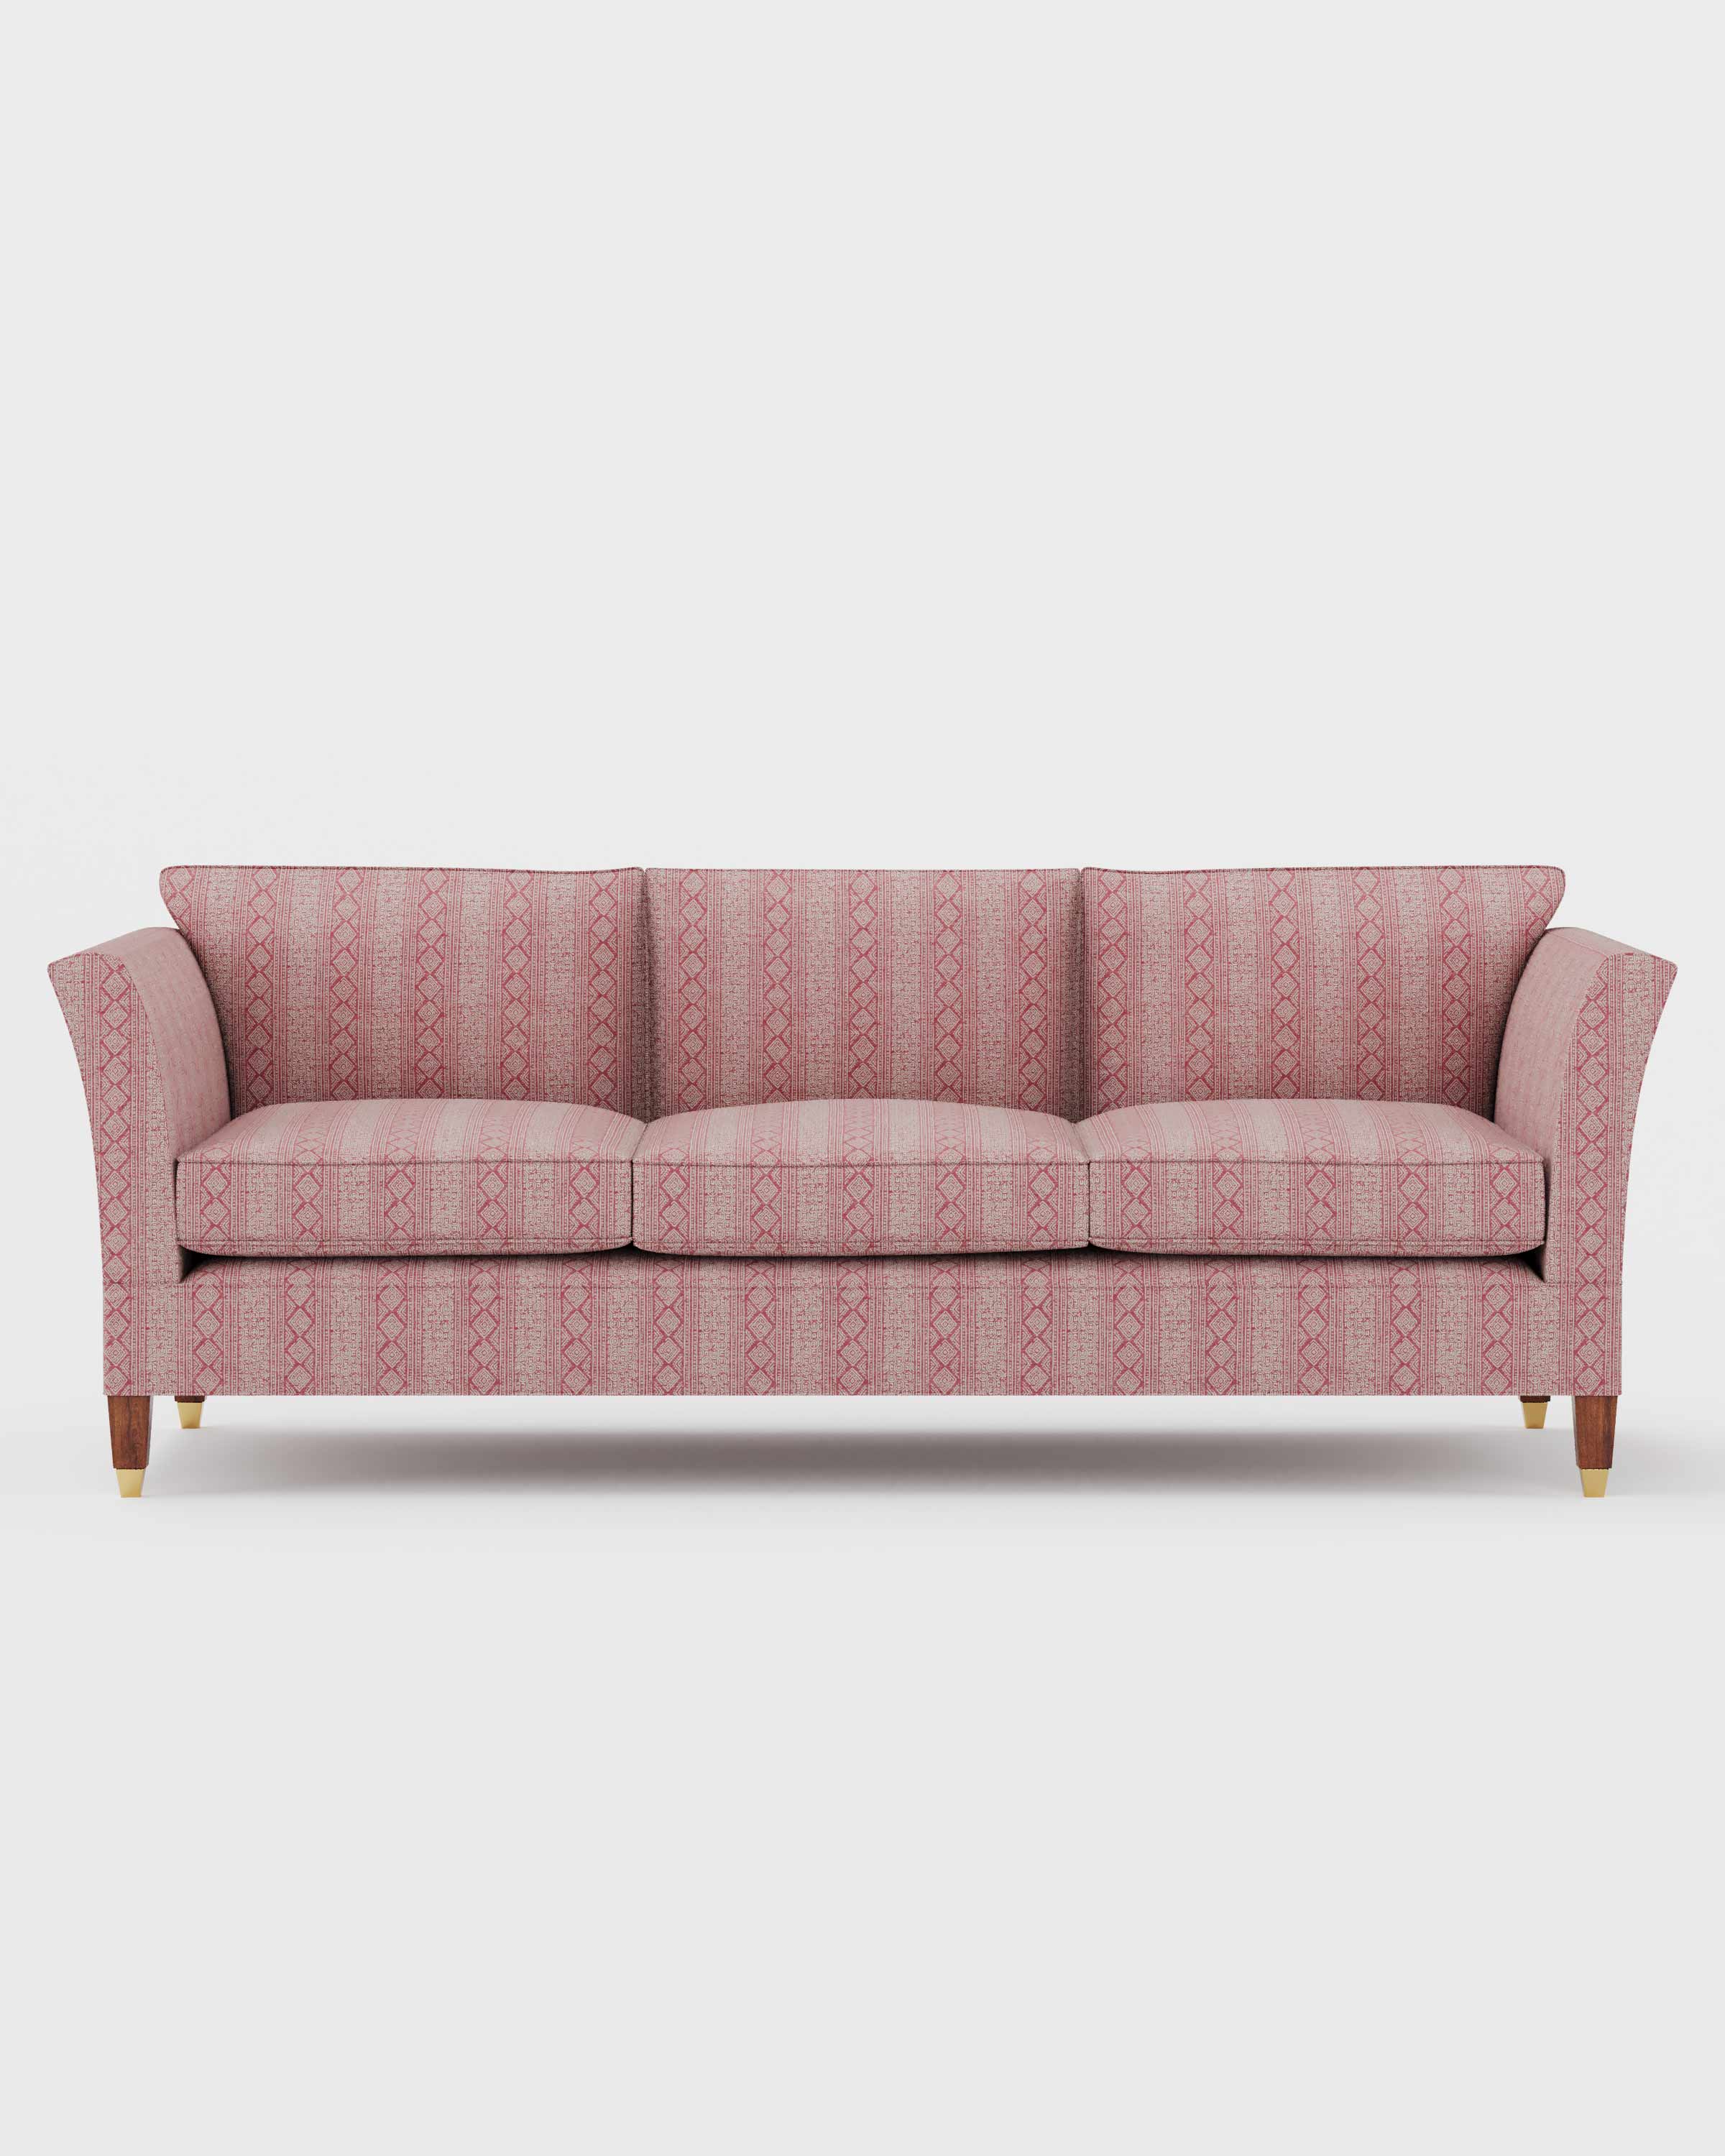 The Vinci Sofa